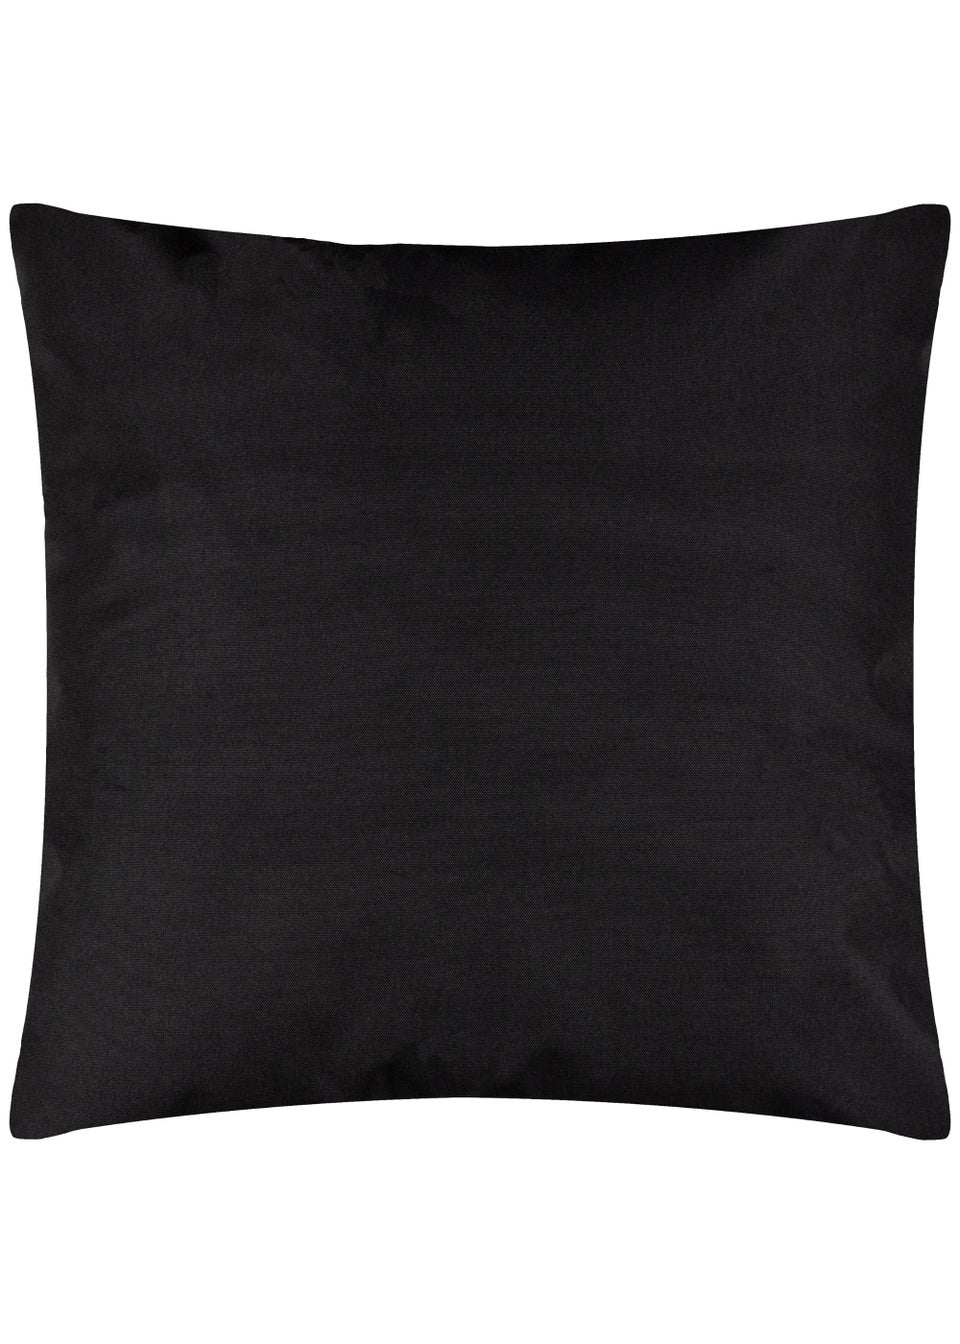 furn. Plain Reversible Outdoor Filled Cushion (55cm x 55cm x 8cm)